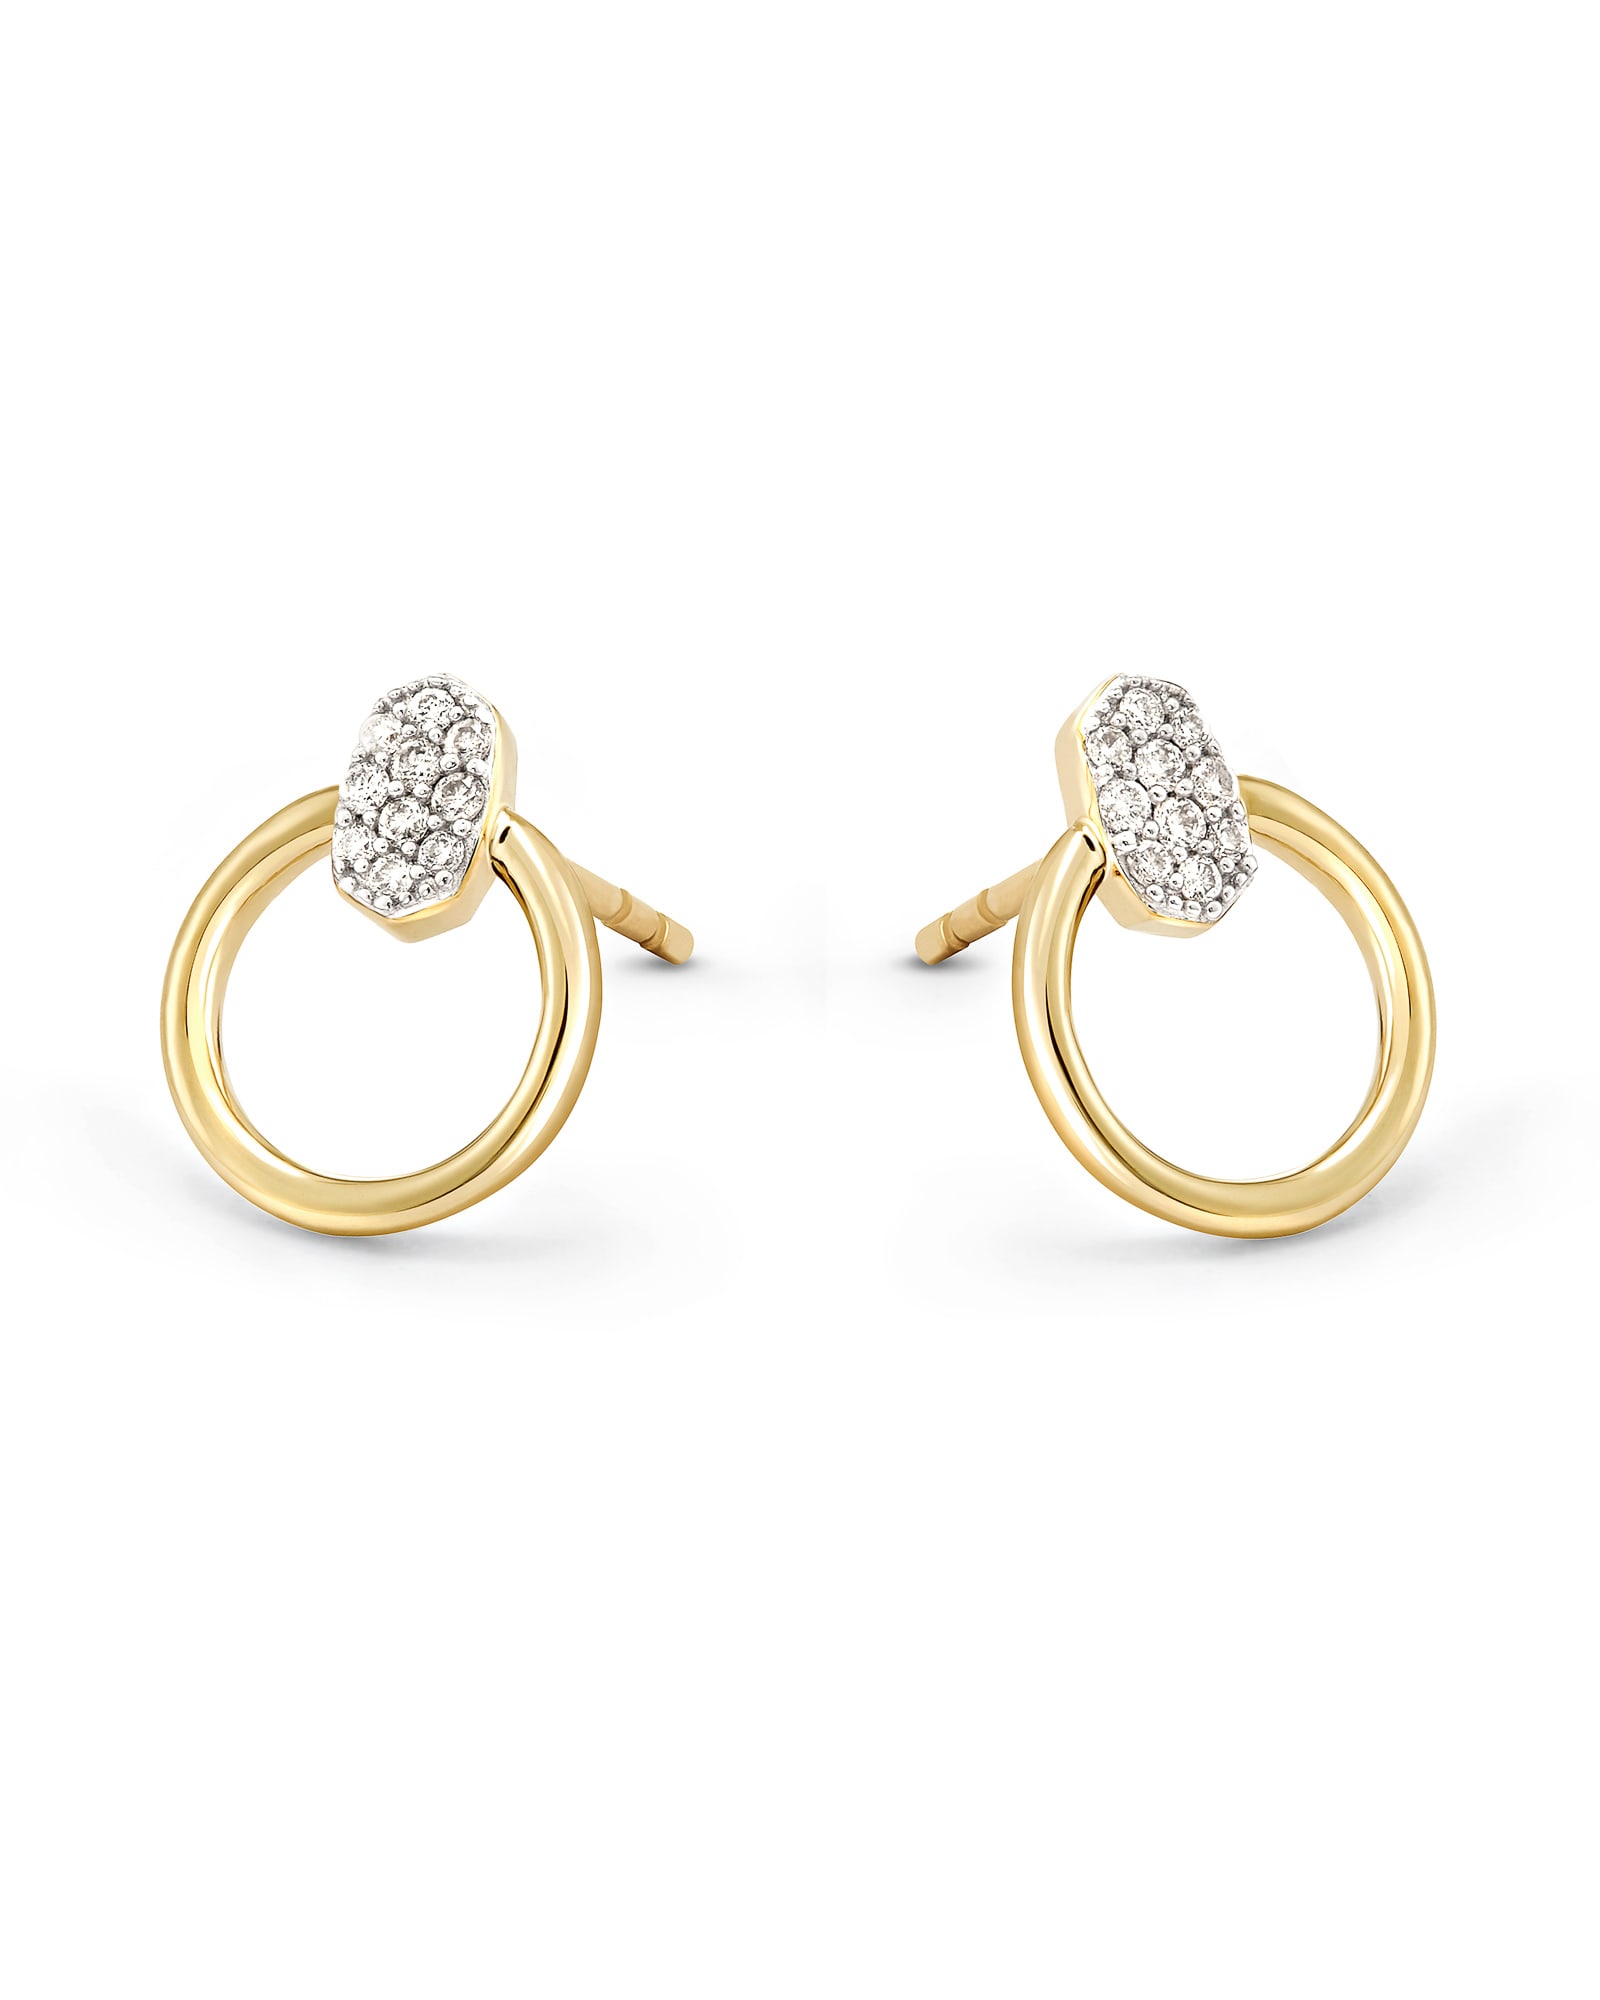 Tegan 14k Yellow Gold Stud Earrings in White Diamond | Kendra Scott